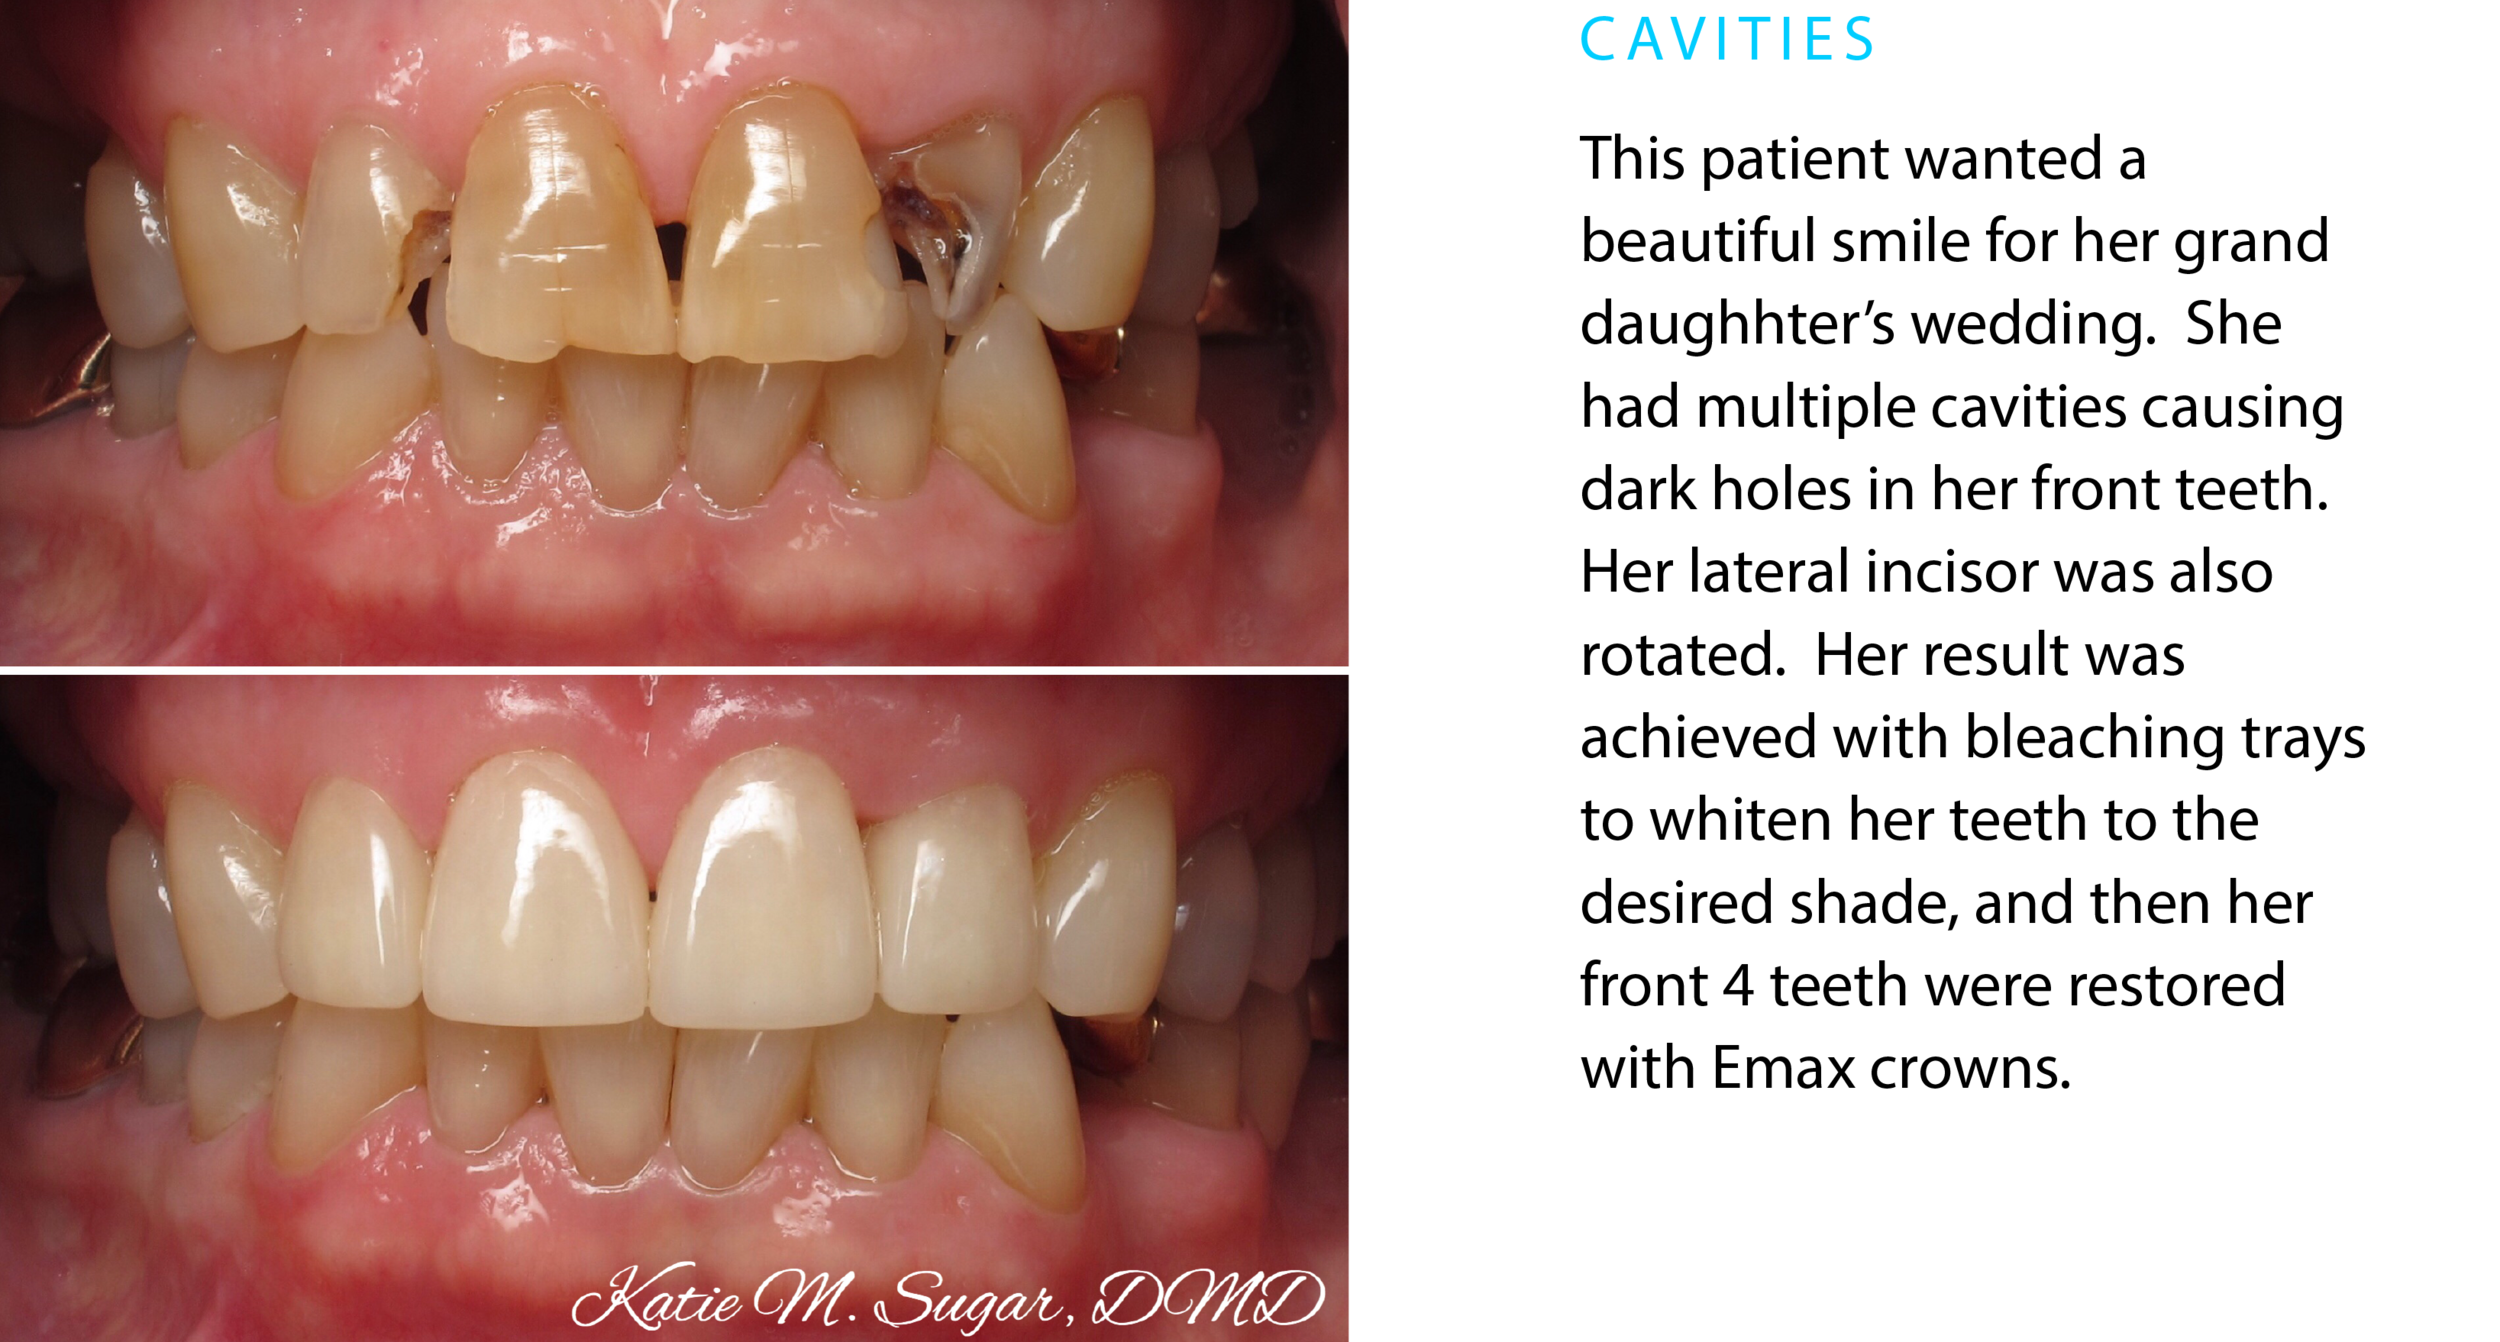 oxnard-family-dental-cavities